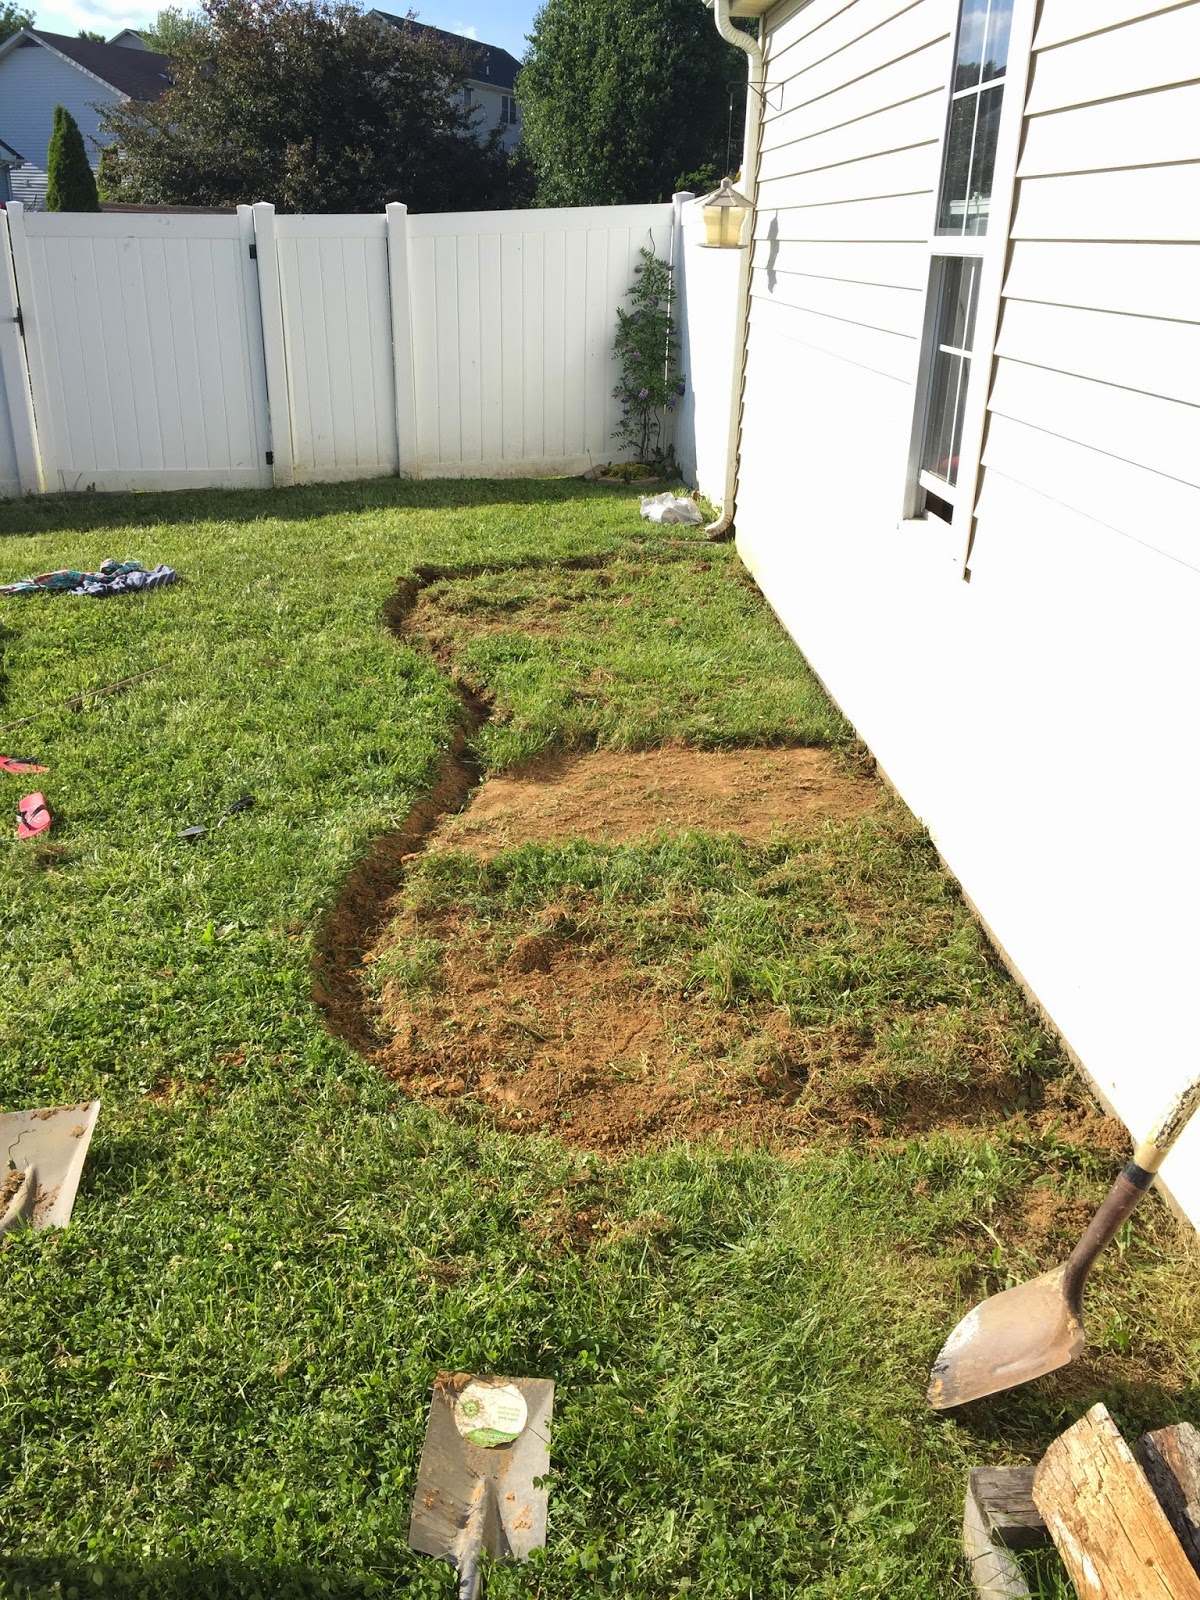 Little Bit Funky How To Make A Backyard Putting Green DIY